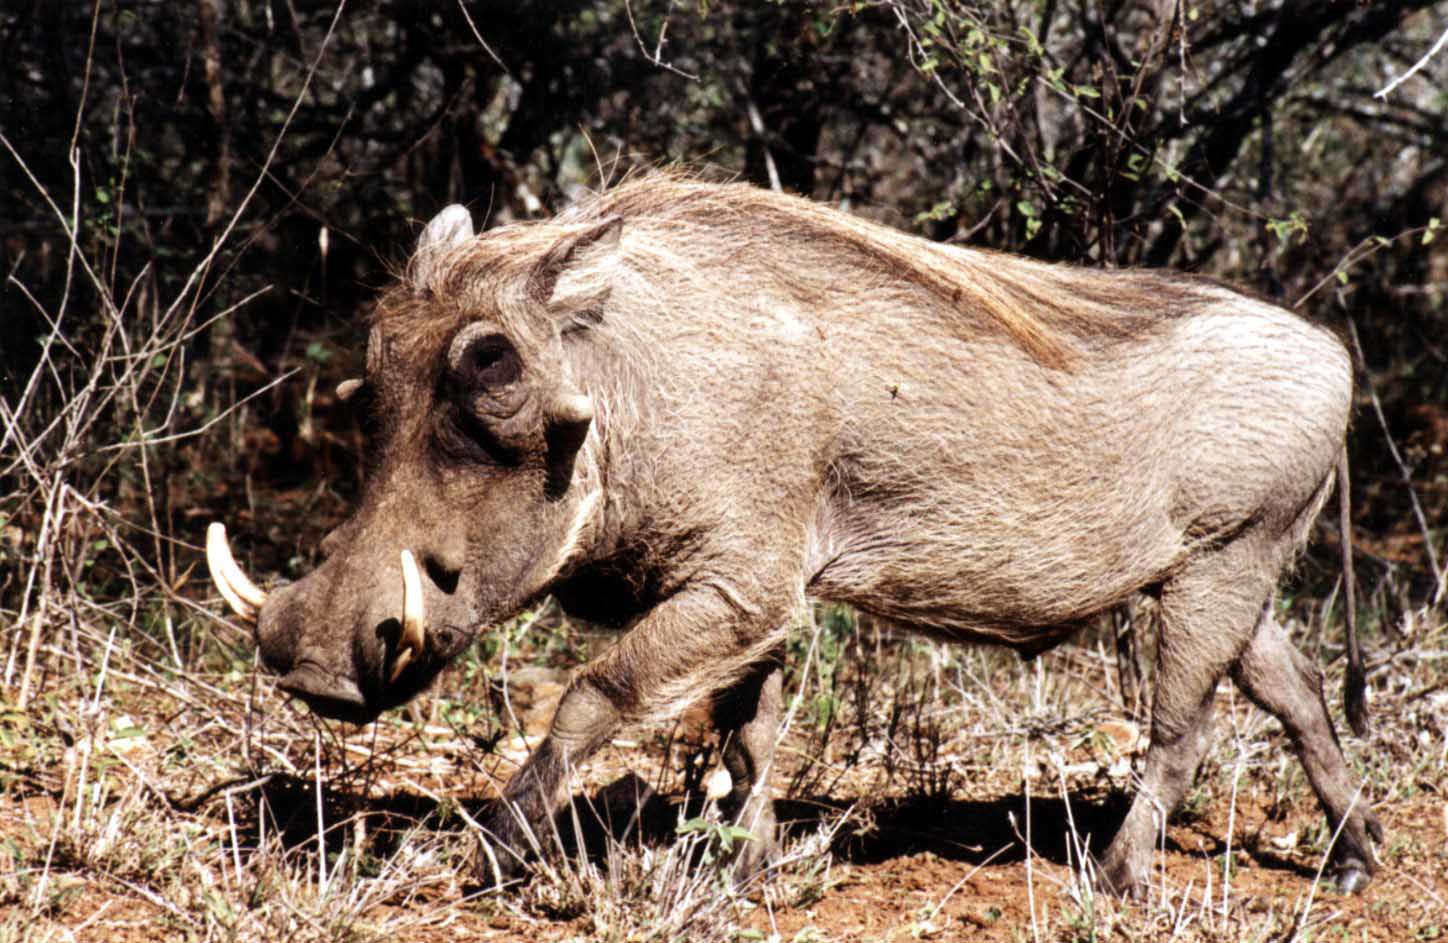 photo of an advancing warthog